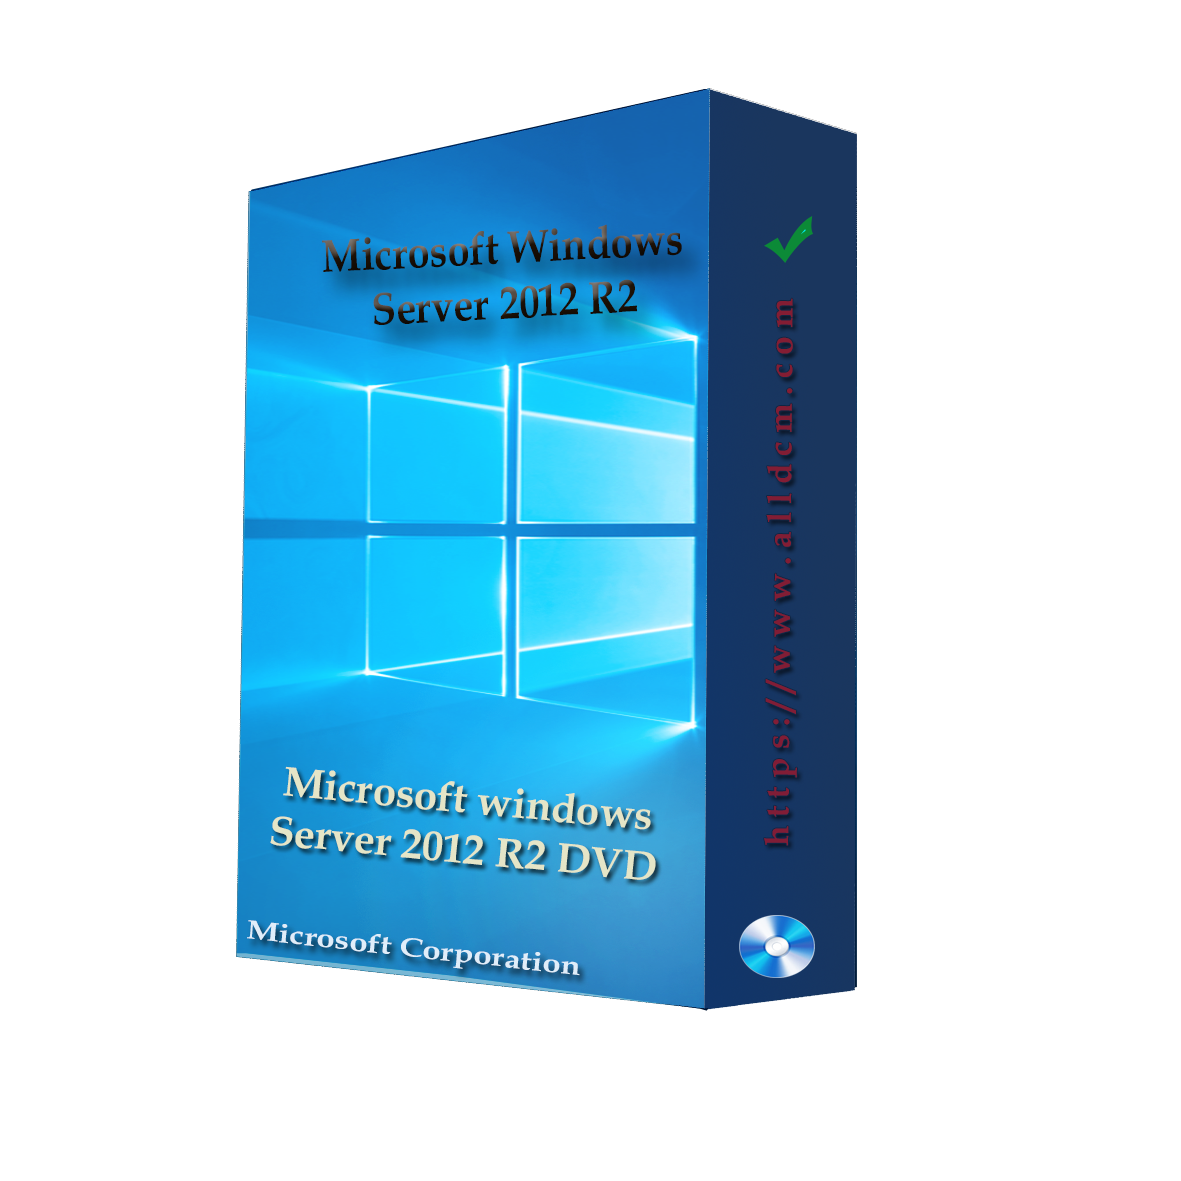 vmware windows server 2012 r2 iso download